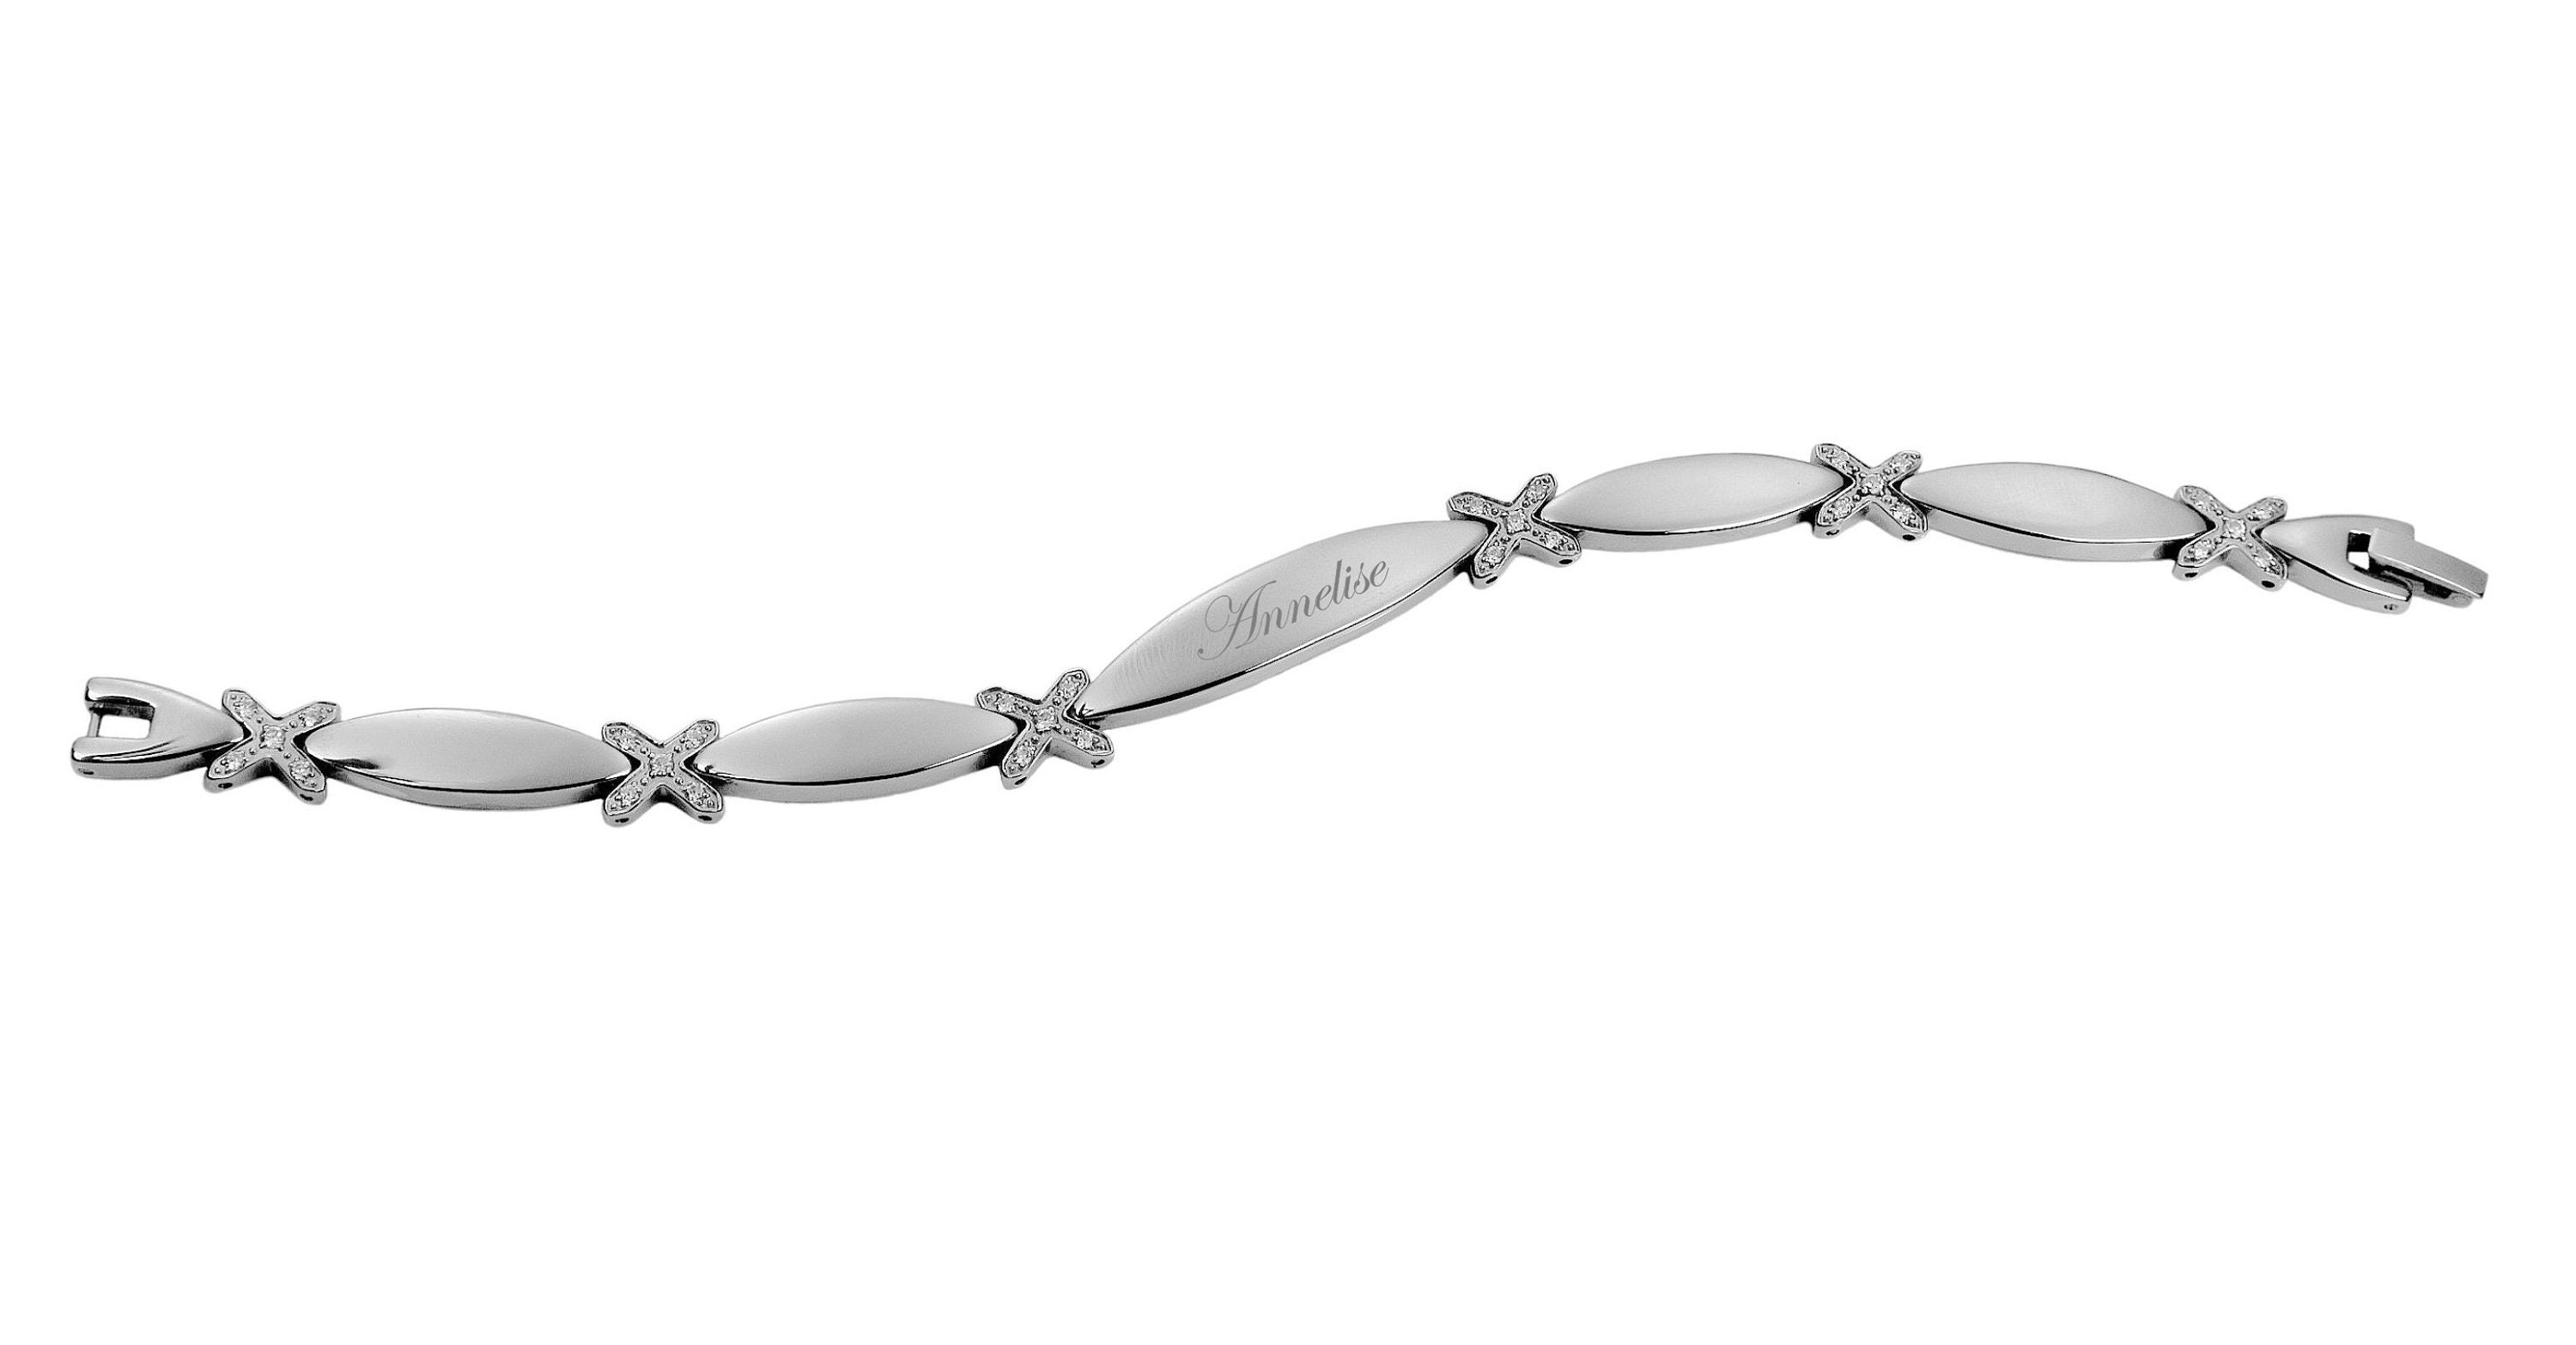 Silver heart bracelet, black cord, personalised jewelry, waterproof – Shani  & Adi Jewelry